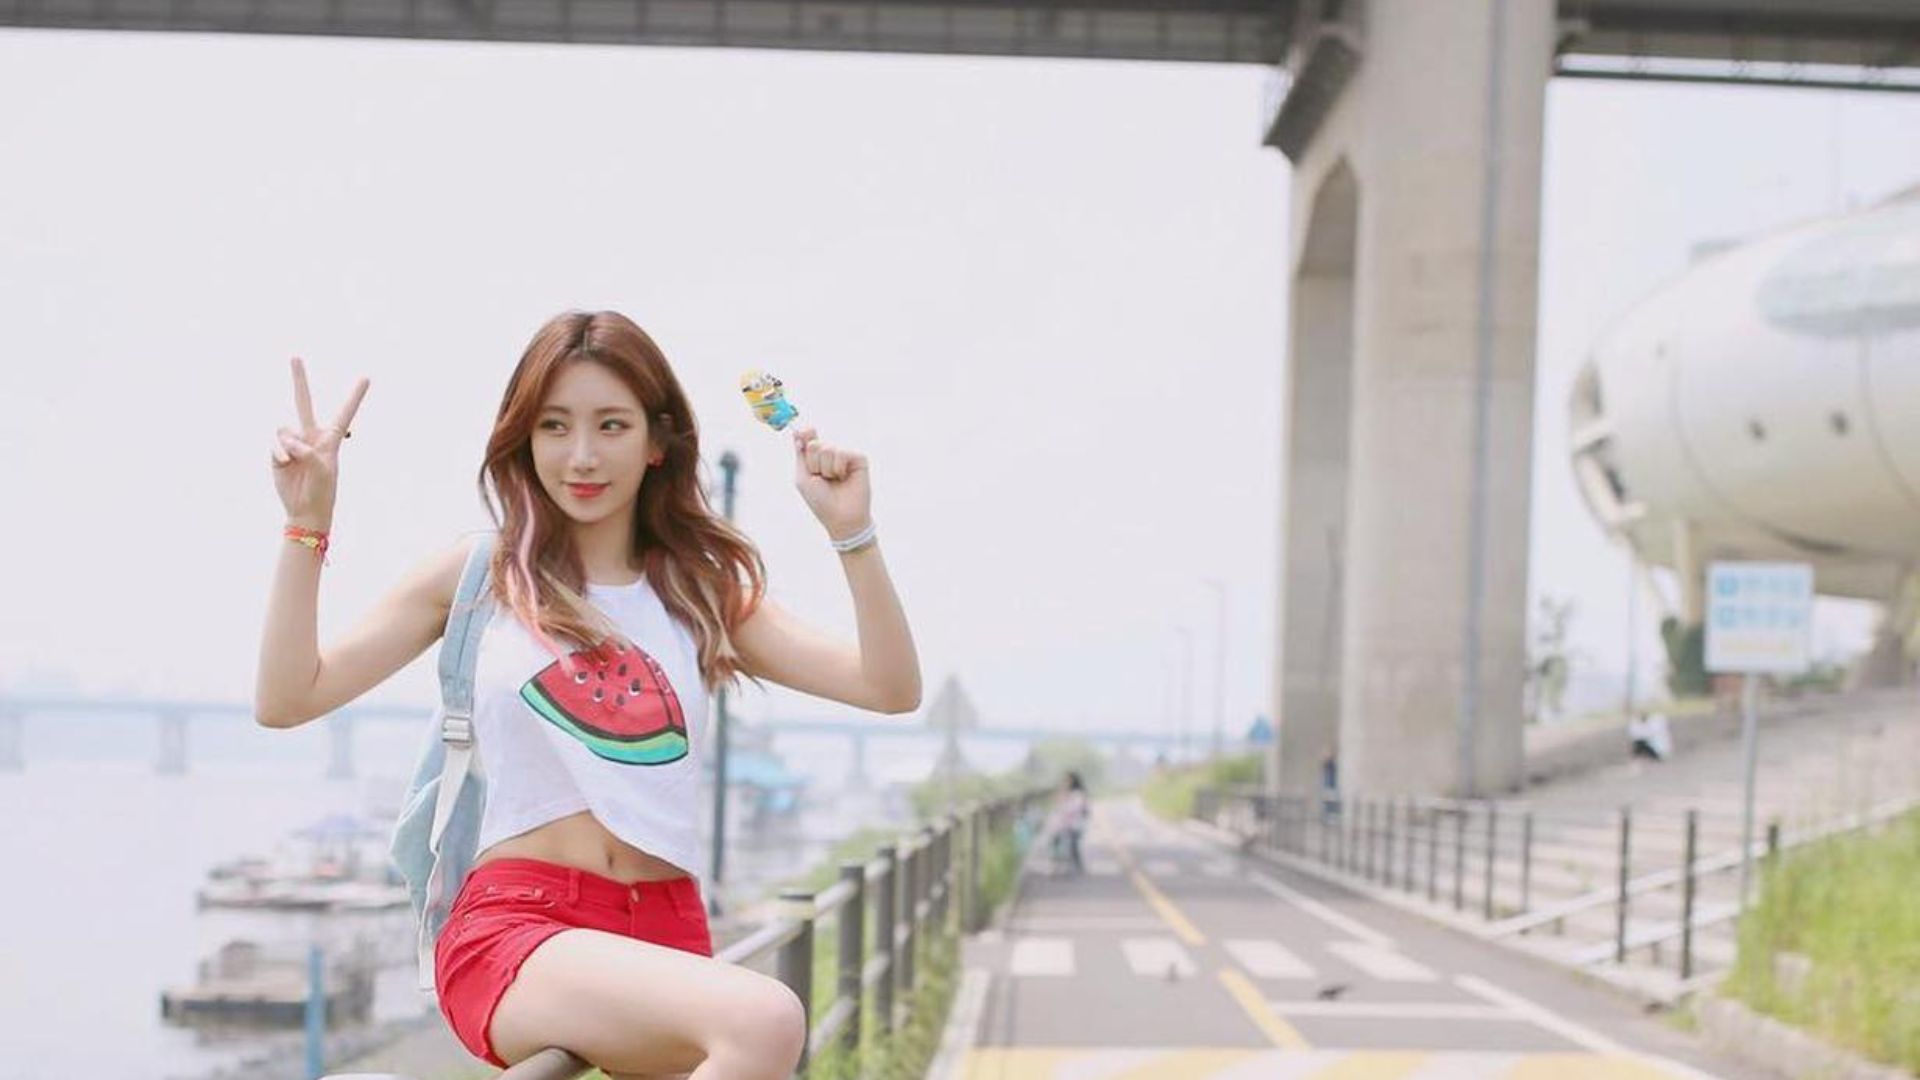 Ye Jung Hwa posing while holding an ice cream